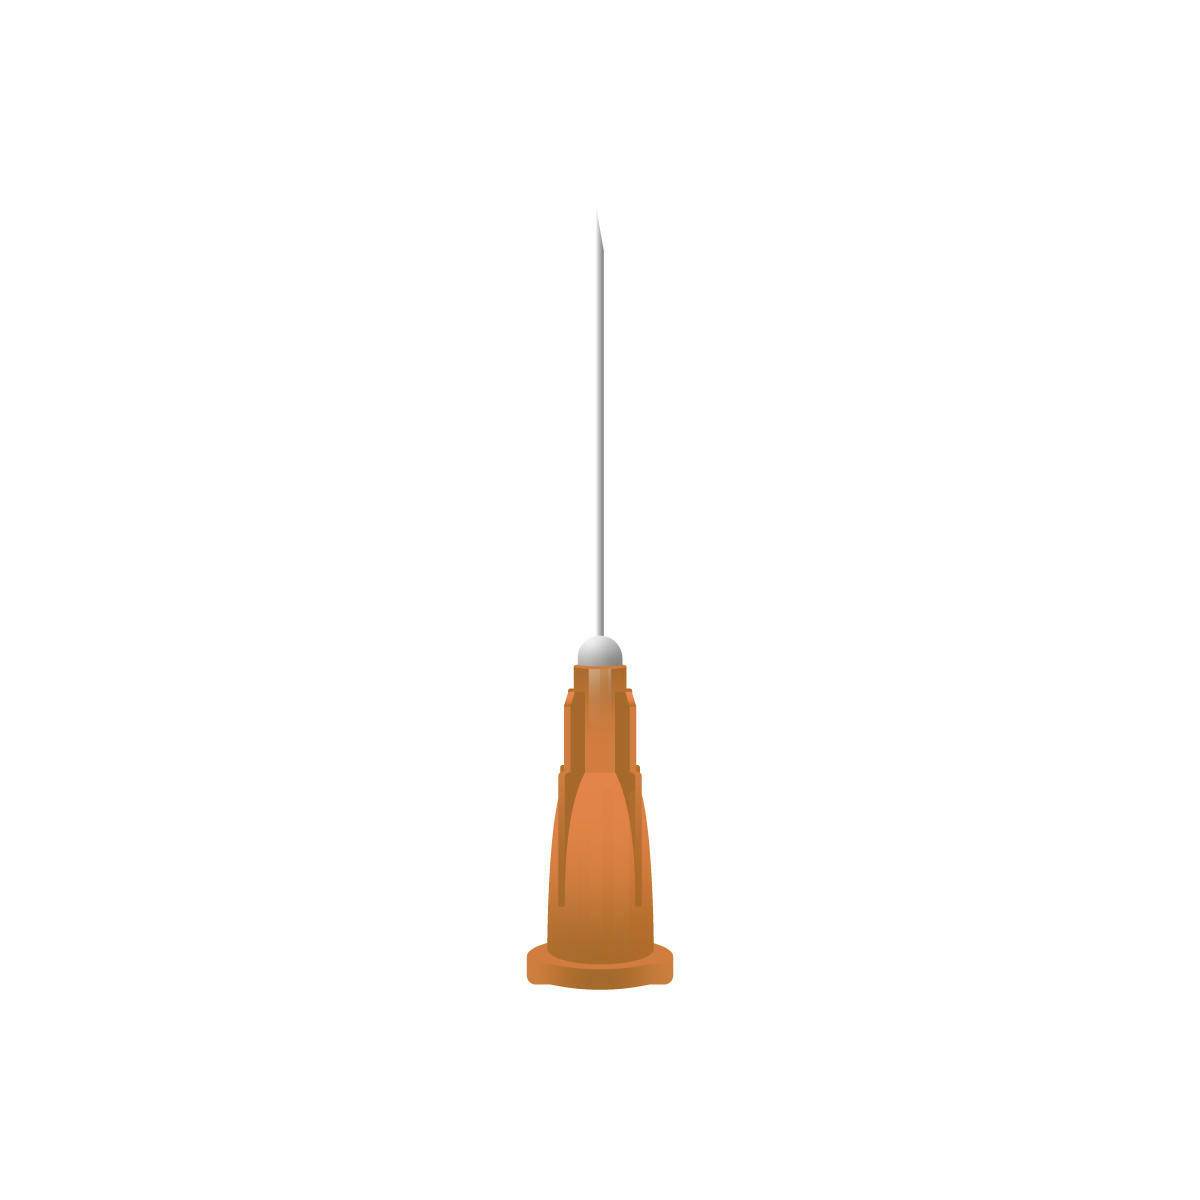 25g Orange 1 inch BD Microlance Needles - UKMEDI